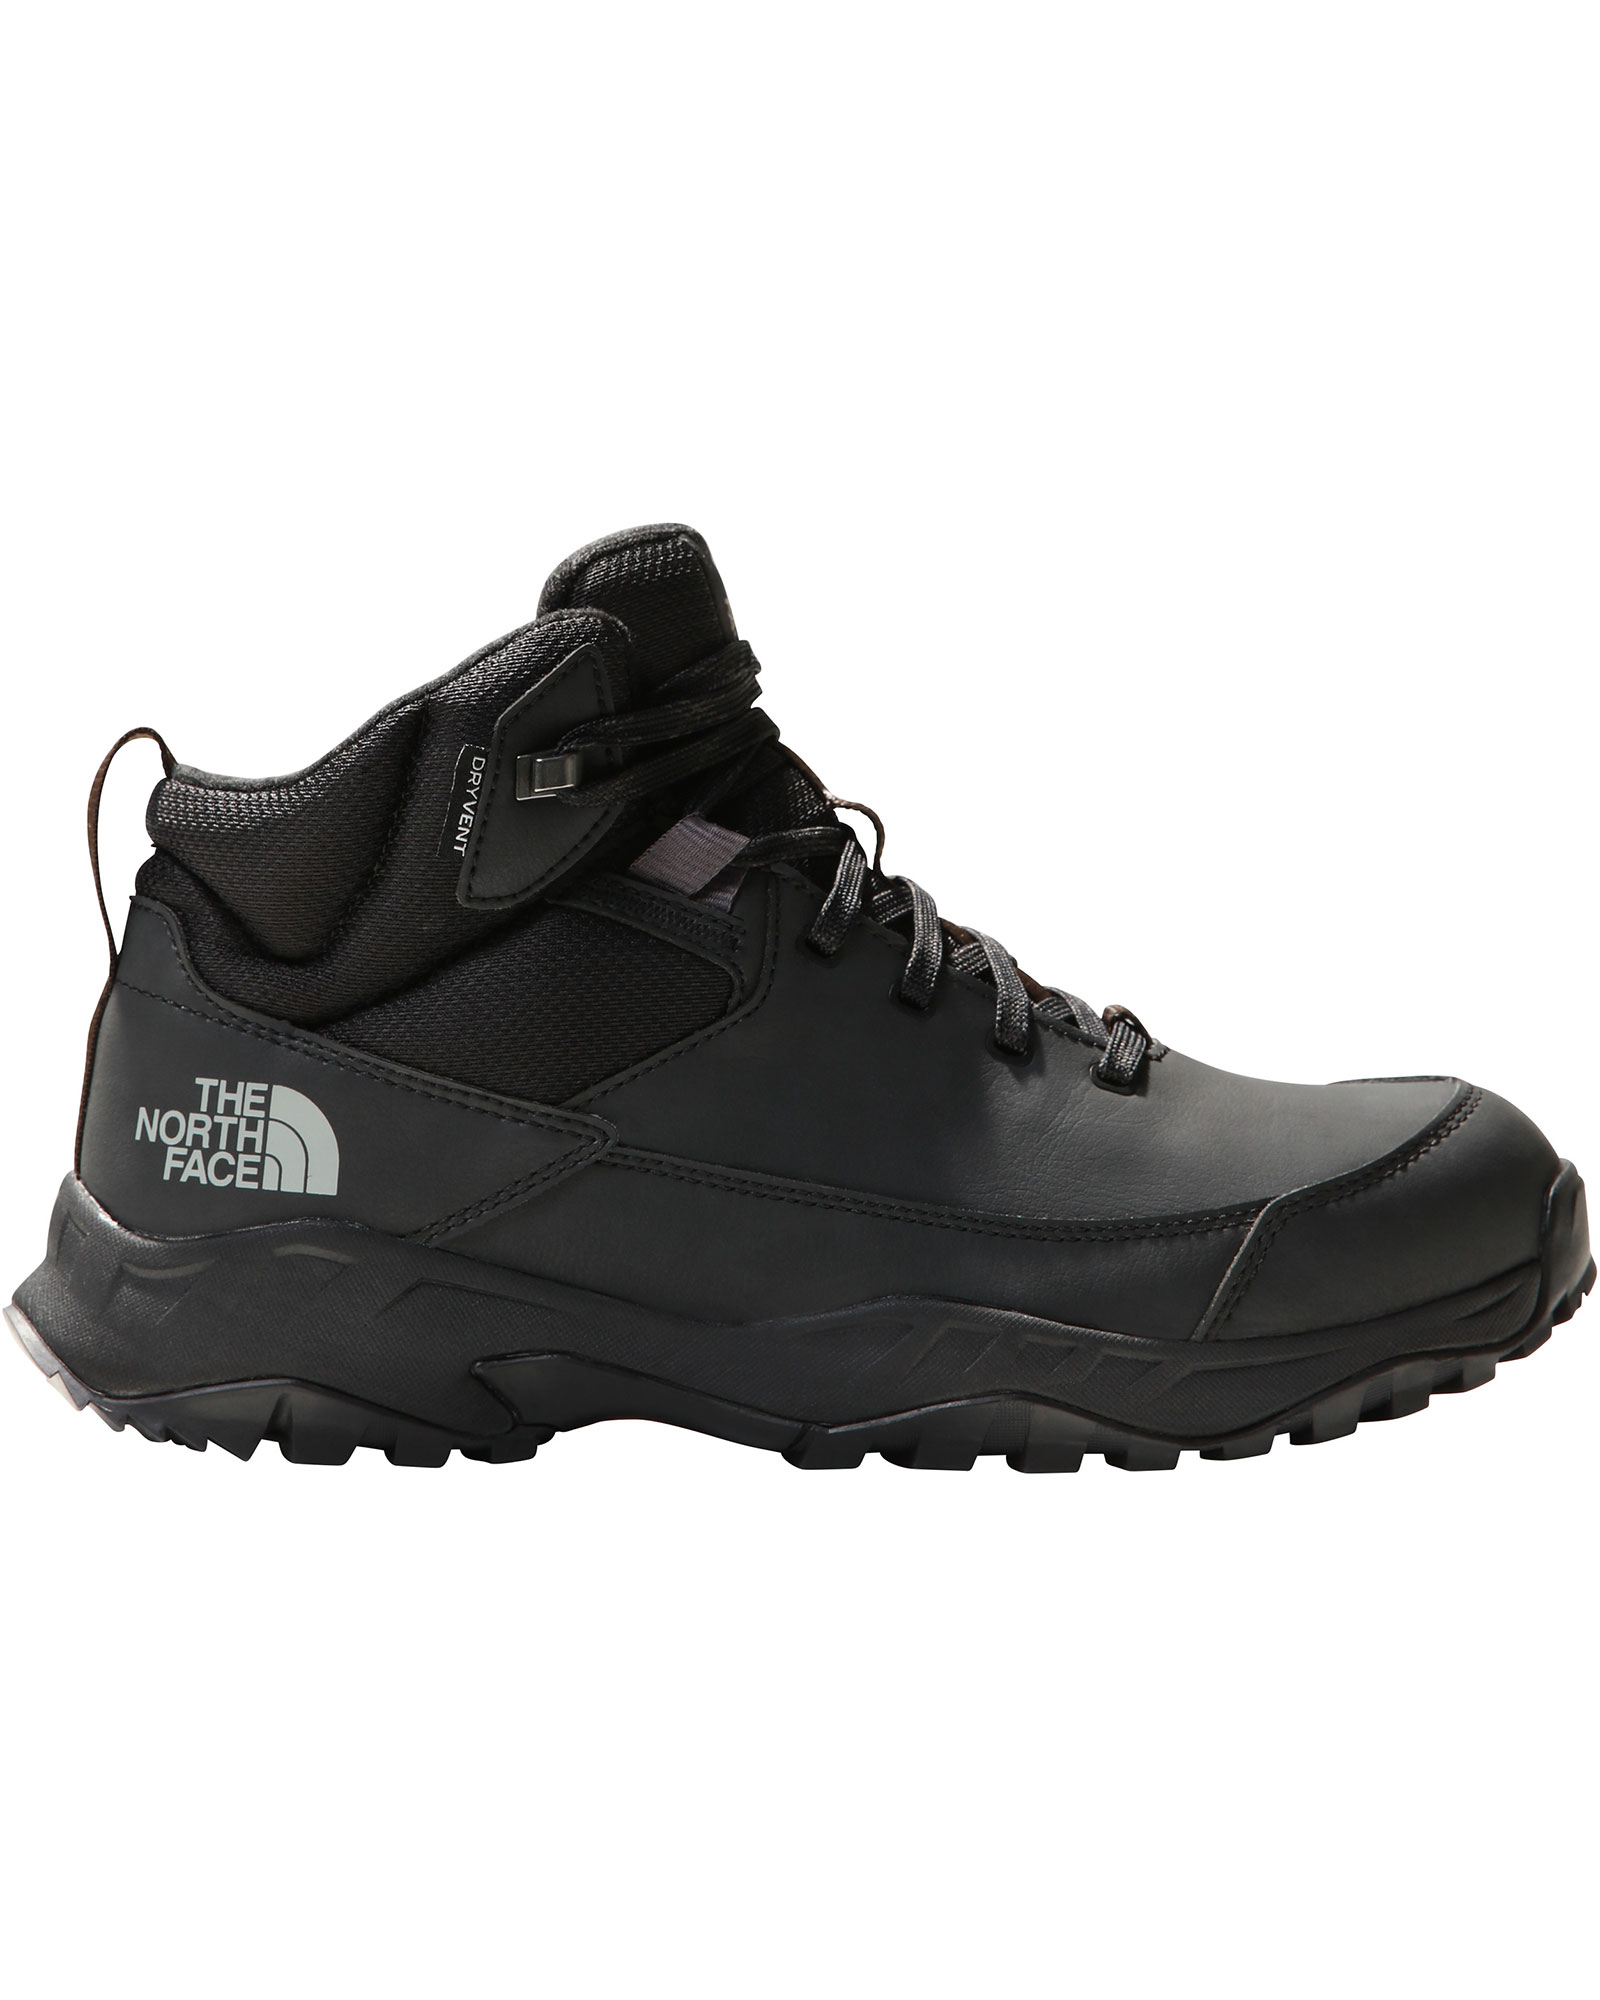 The North Face Storm Strike III Waterproof Men’s Boots - TNF Black/Asphalt Grey UK 8